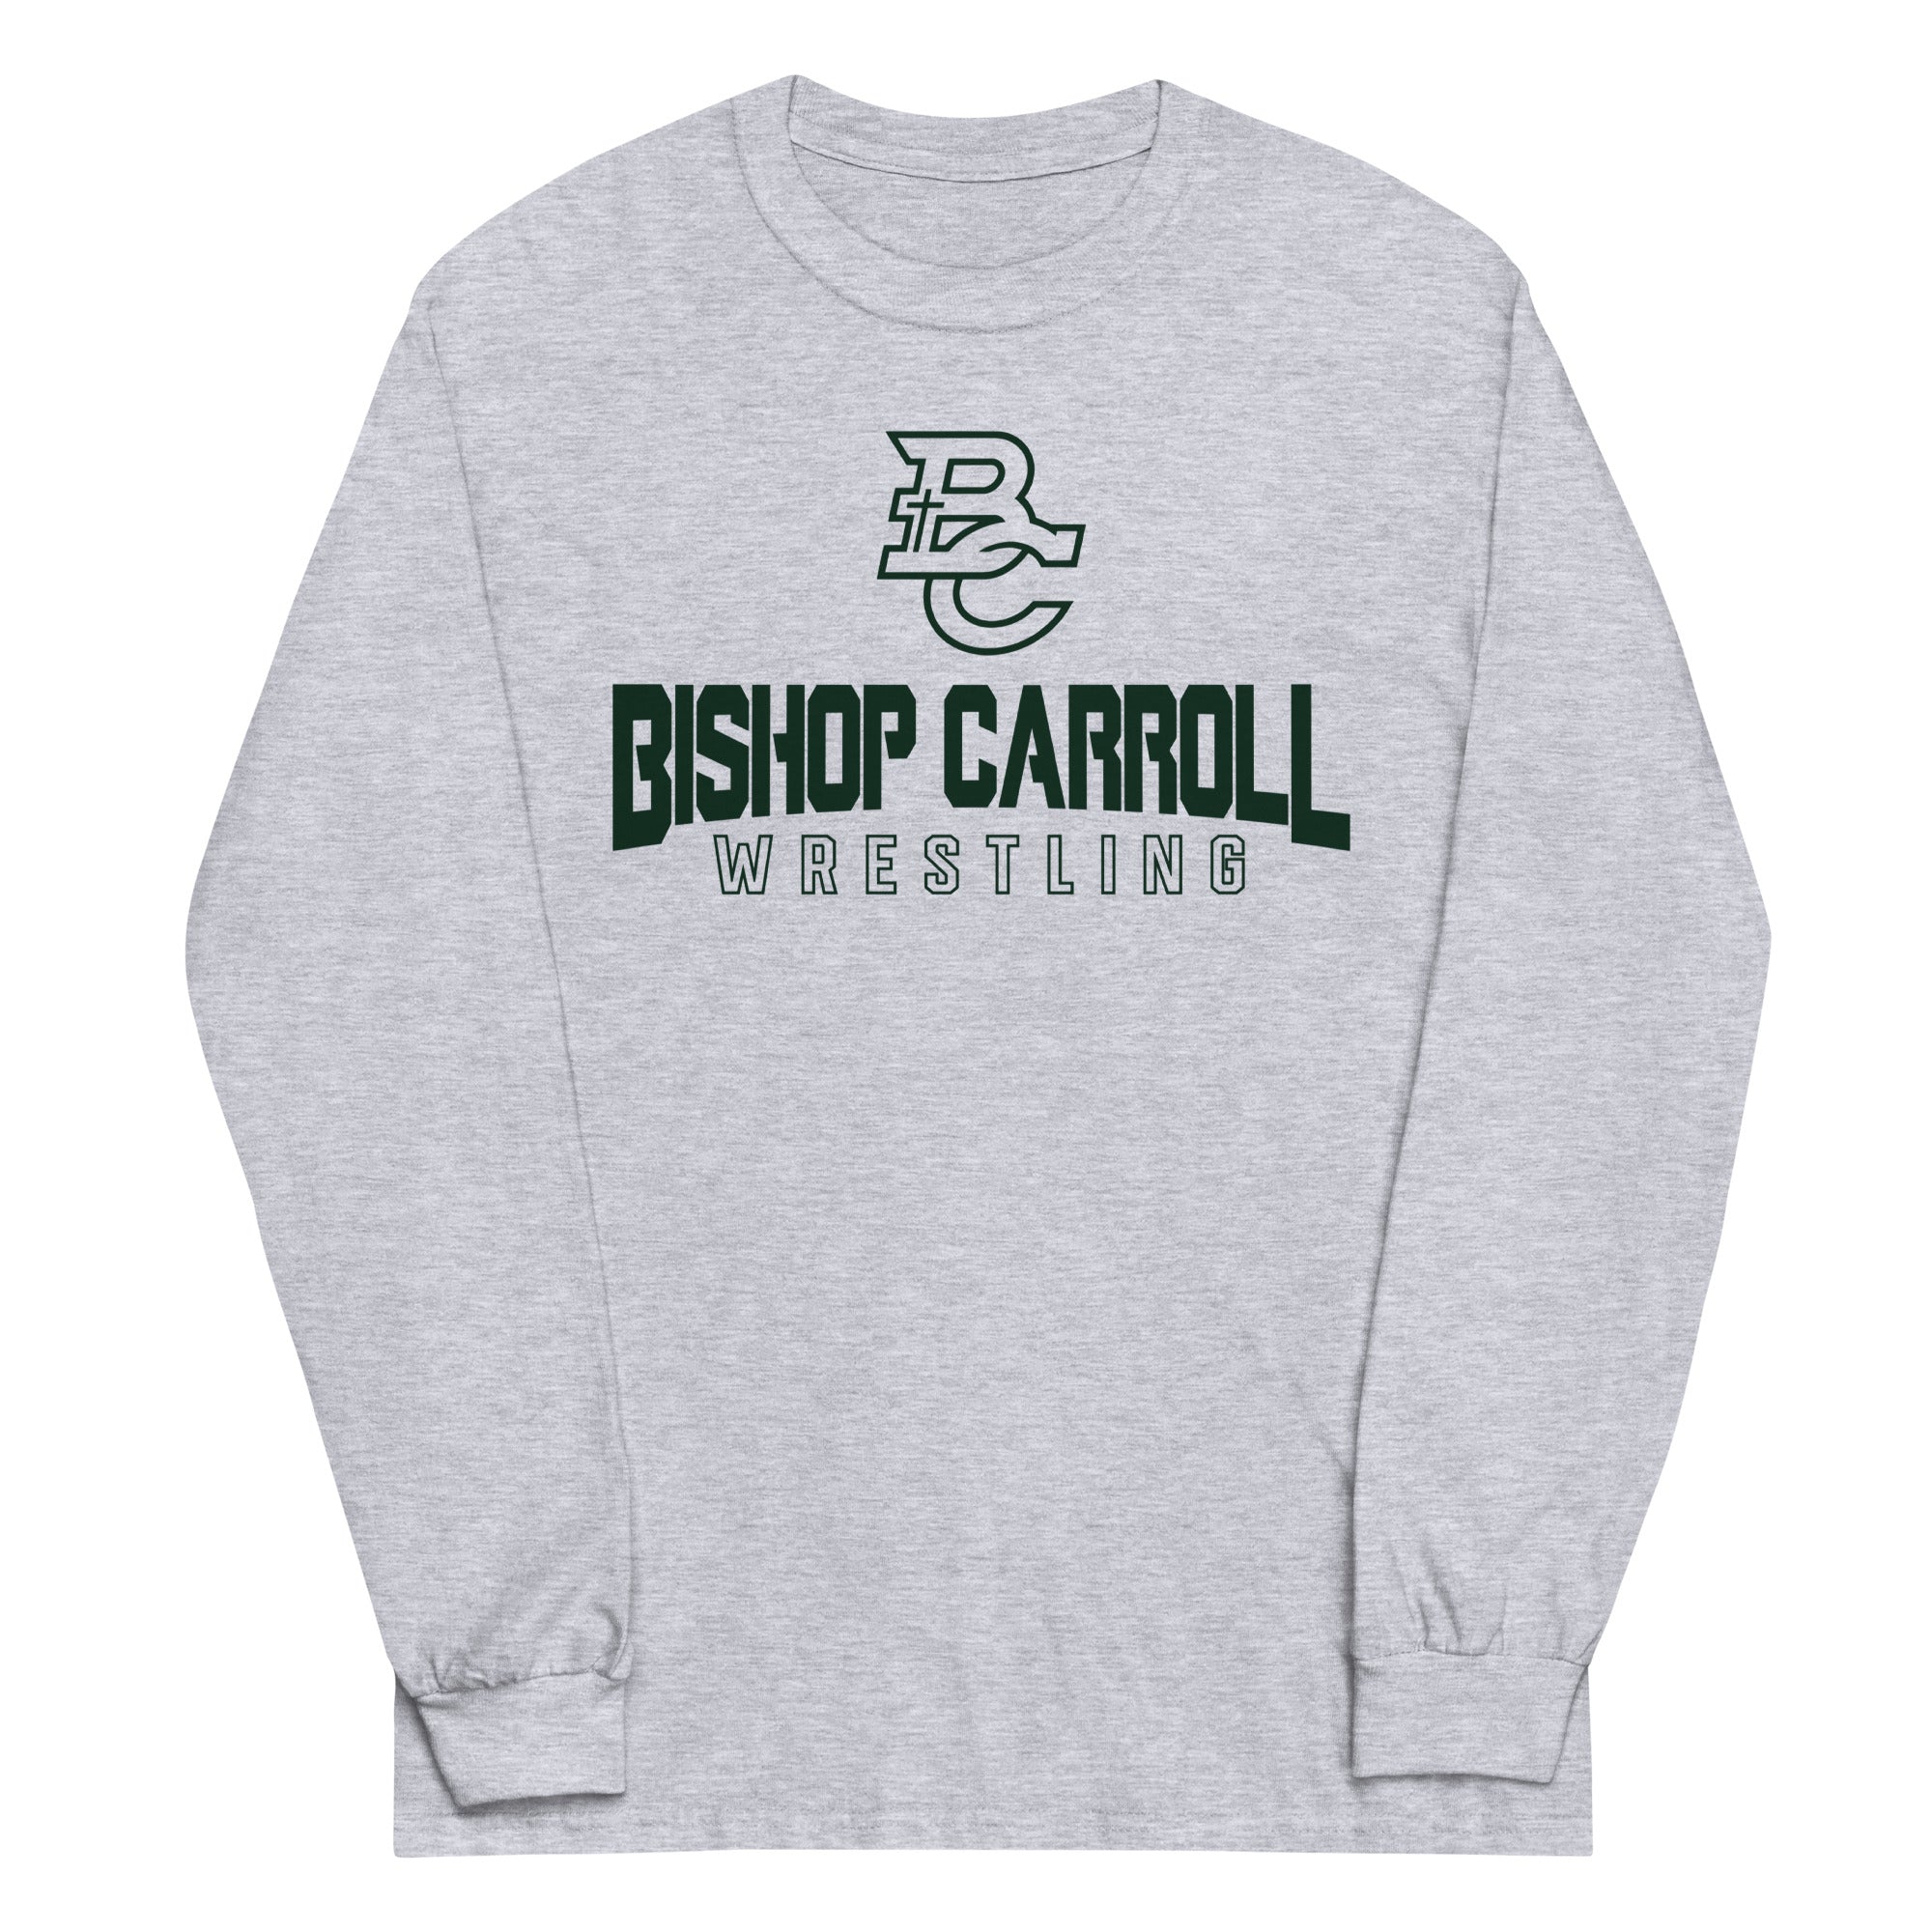 Bishop Carroll Wrestling Men’s Long Sleeve Shirt